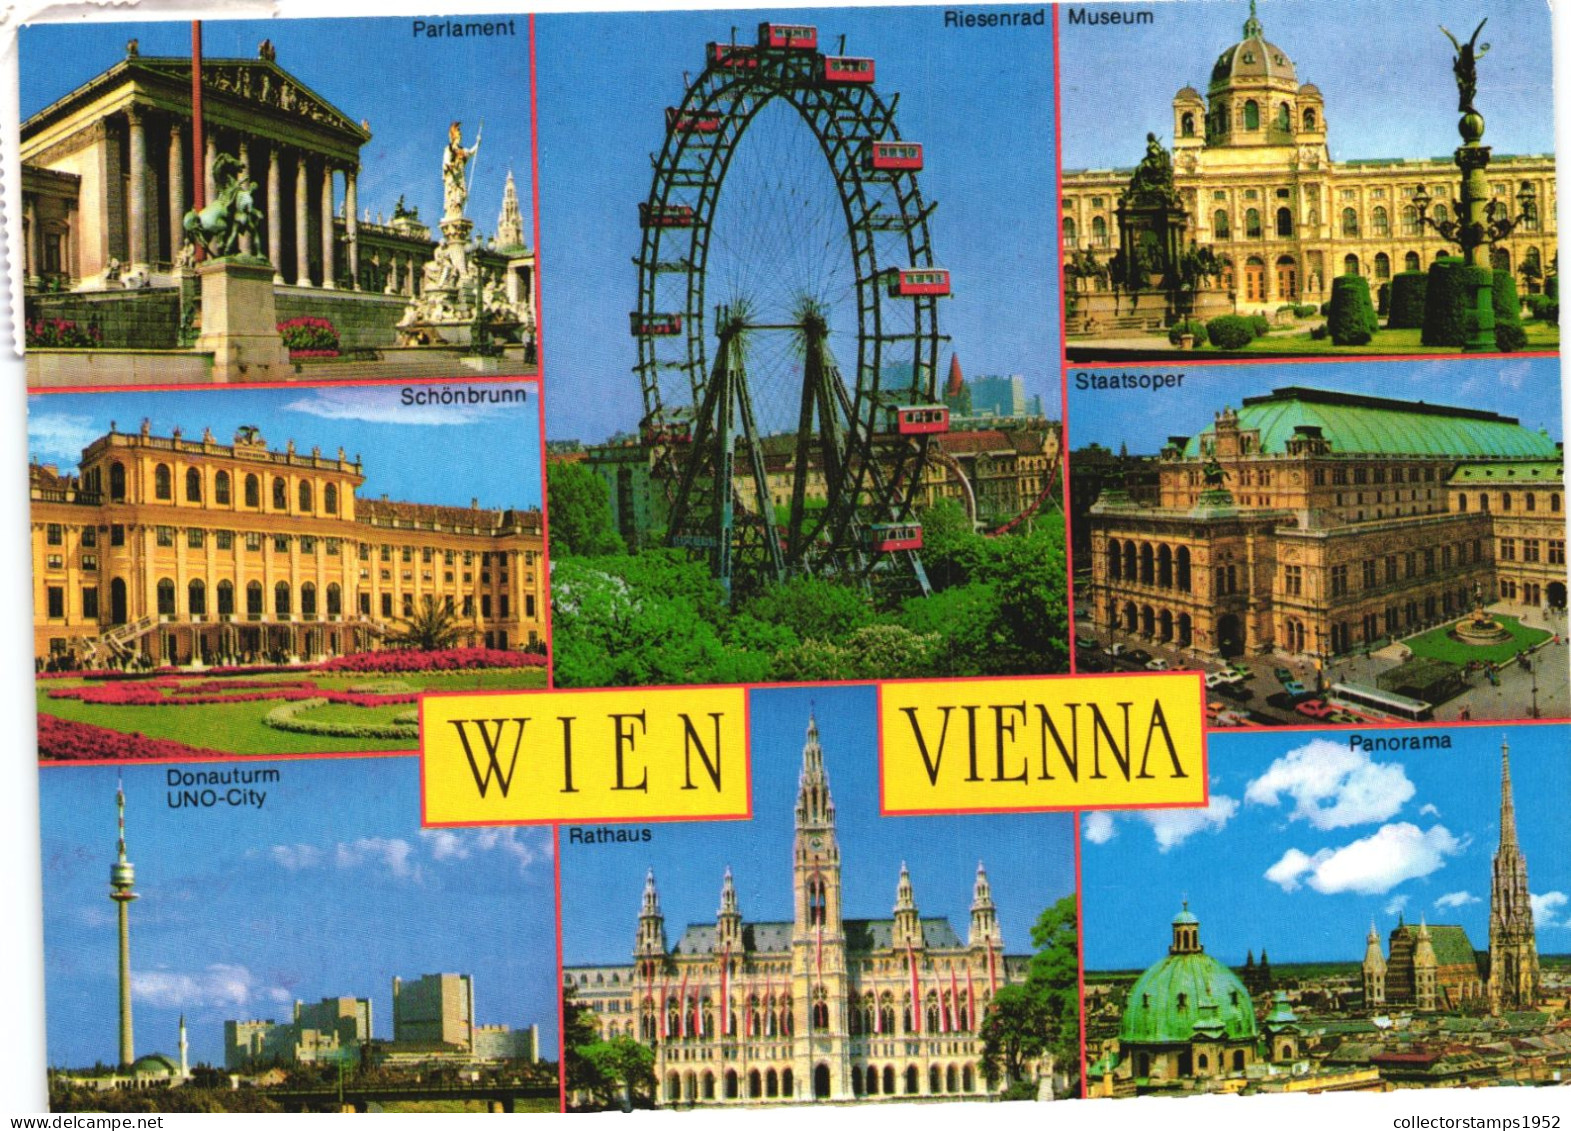 VIENNA, MULTIPLE VIEWS, ARCHITECTURE, PARLIAMENT, GIANT WHEEL, PALACE, PARK, TOWER, STATUE, AUSTRIA, POSTCARD - Vienna Center